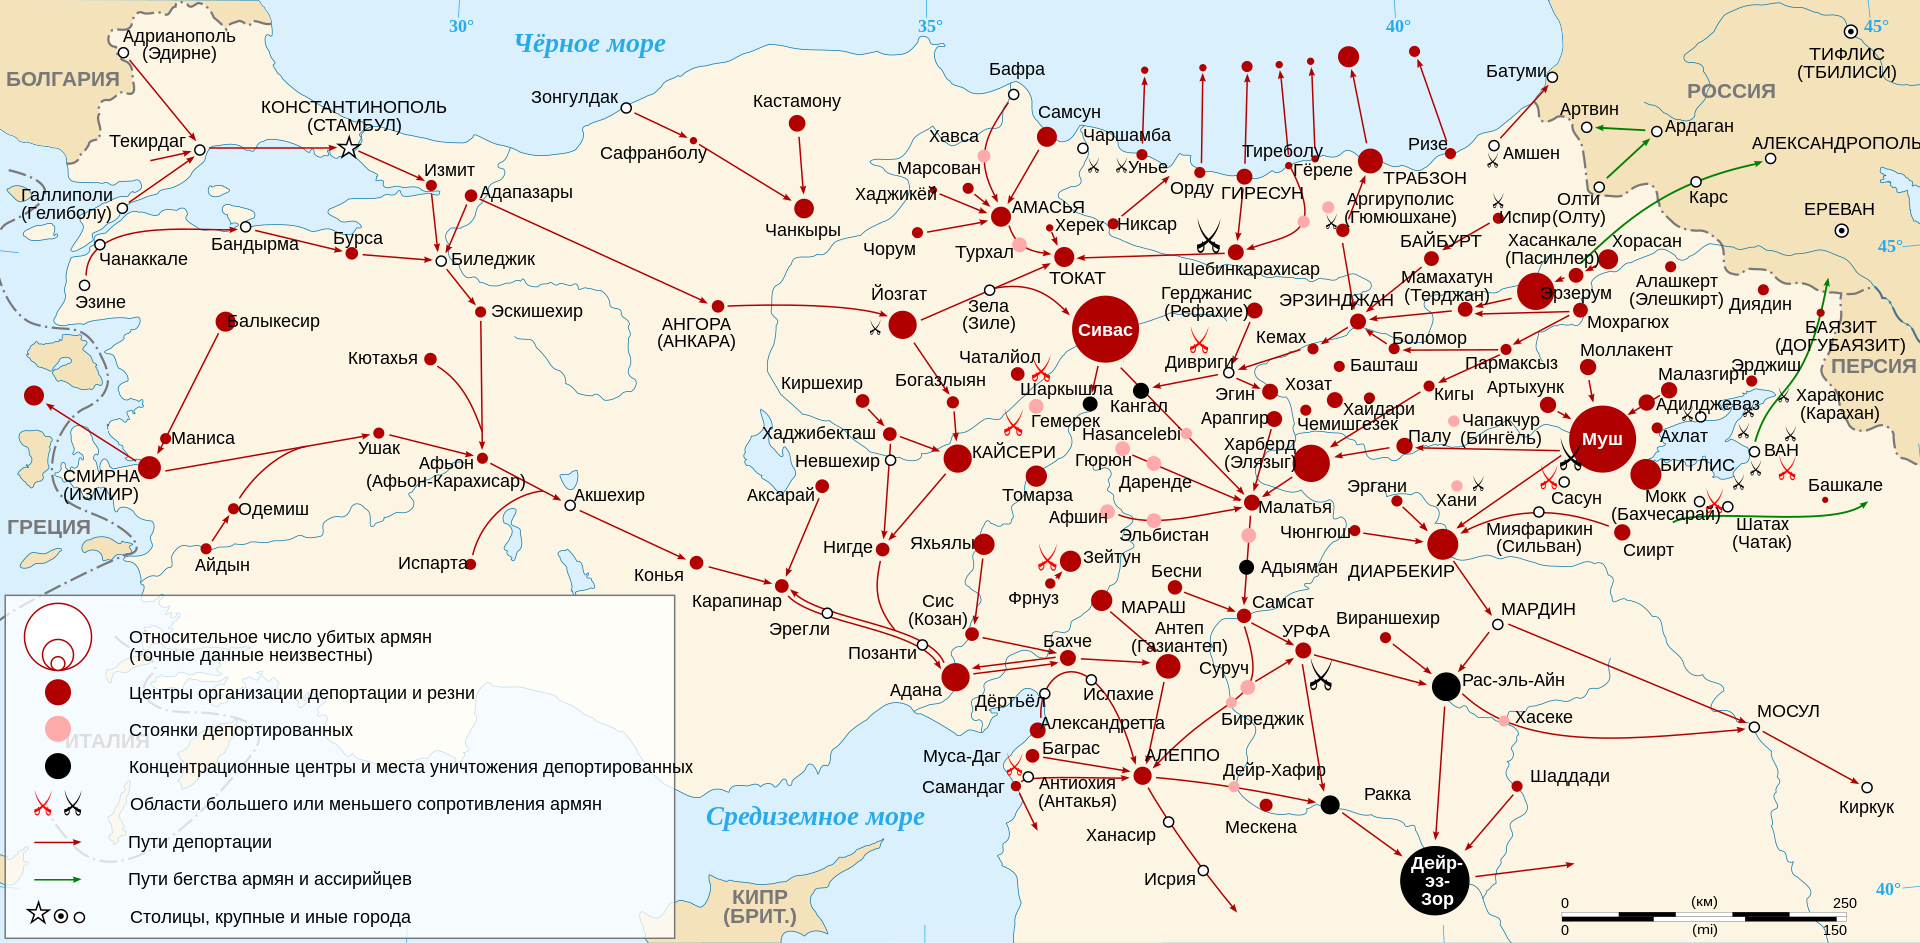 1920px-Armenian_Genocide_Map-ru.svg.png